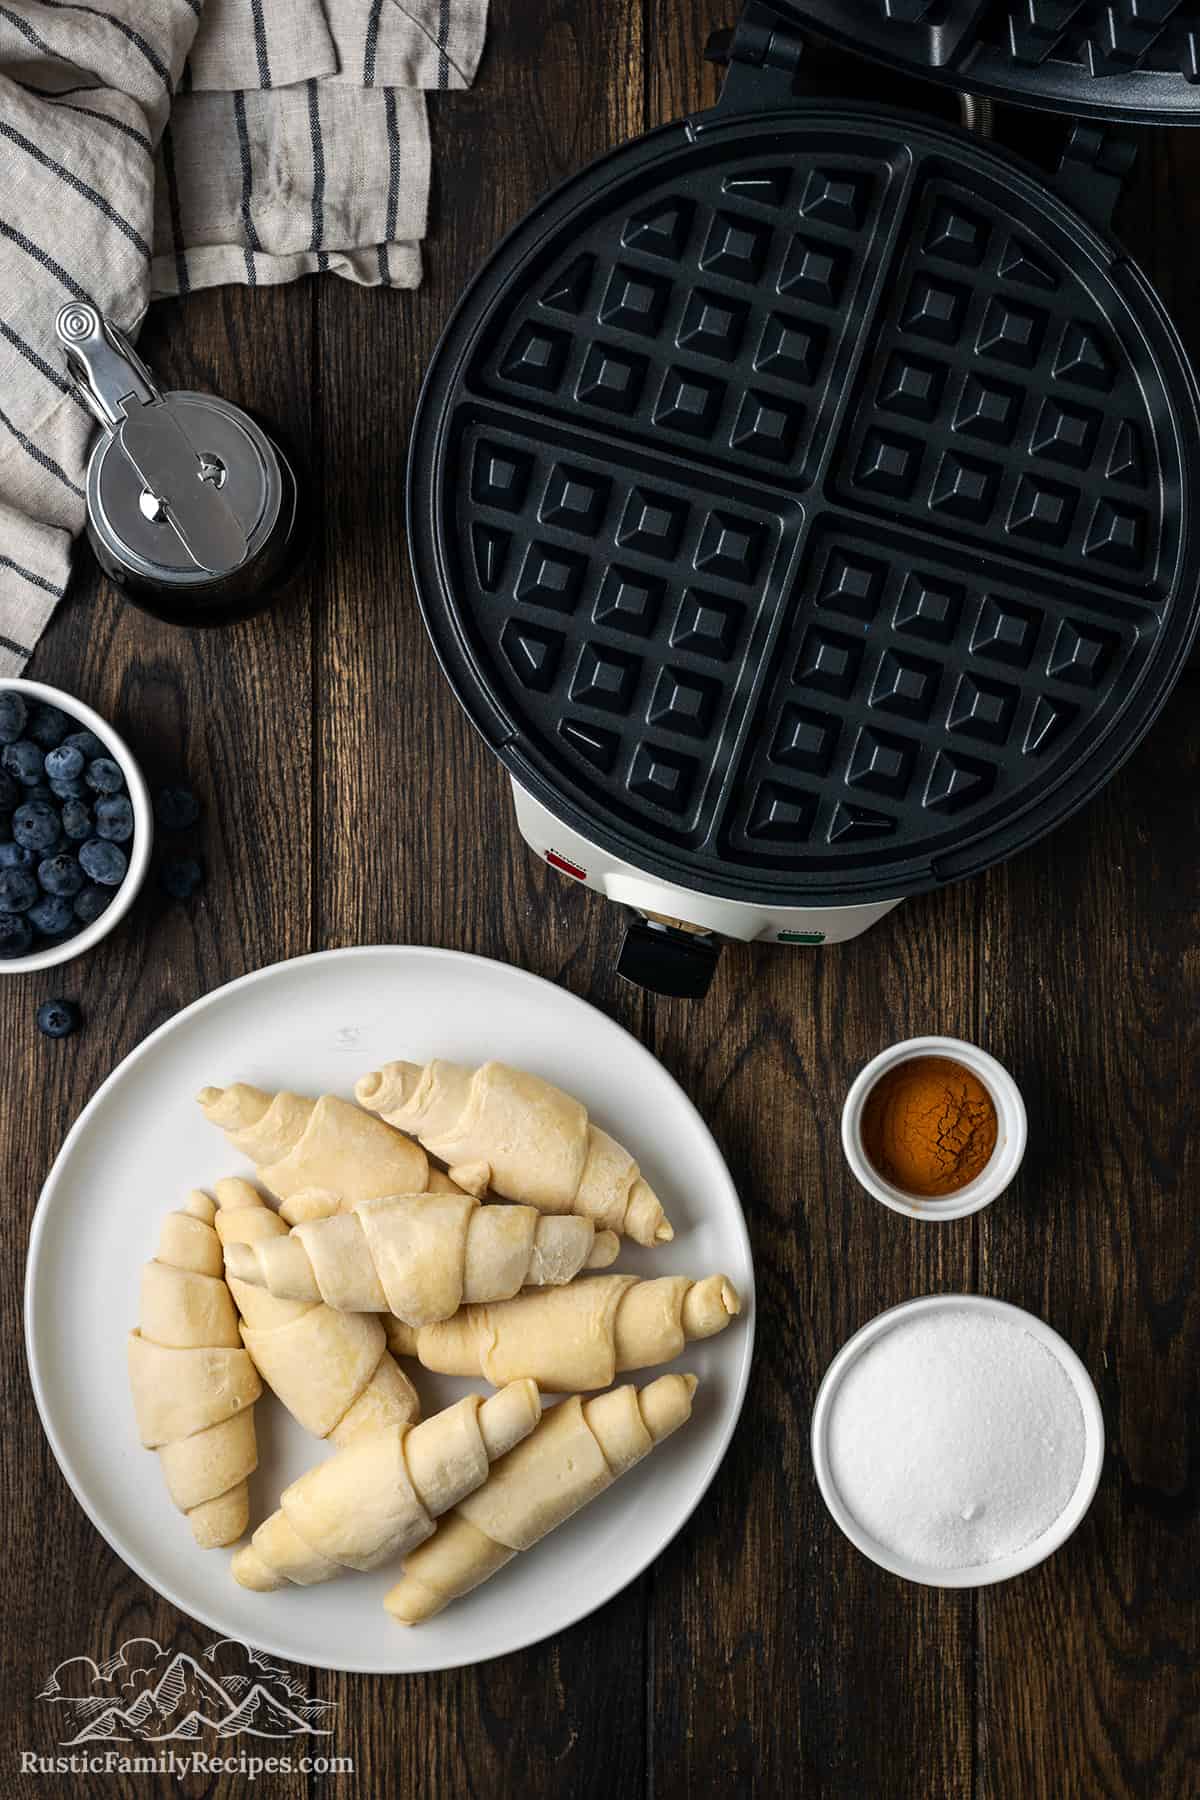 Top view of waffle maker, mini croissants, cinnamon and sugar